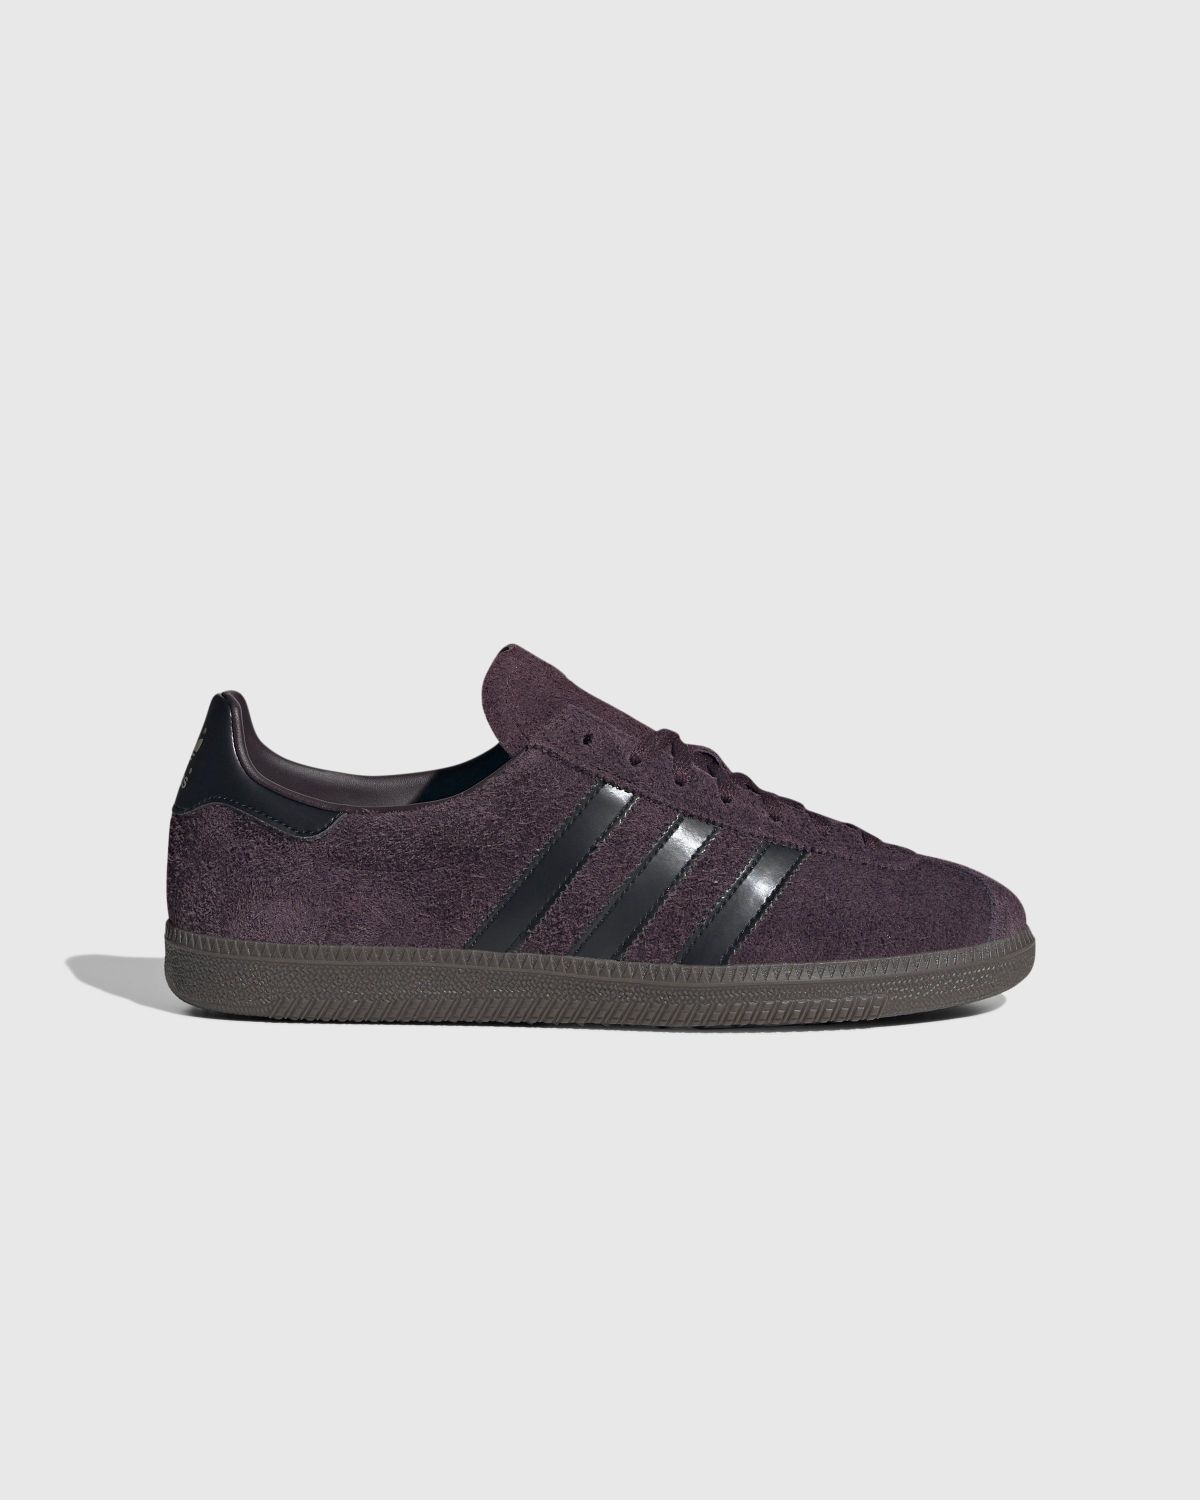 Adidas – State Brown - Sneakers - Brown - Image 1